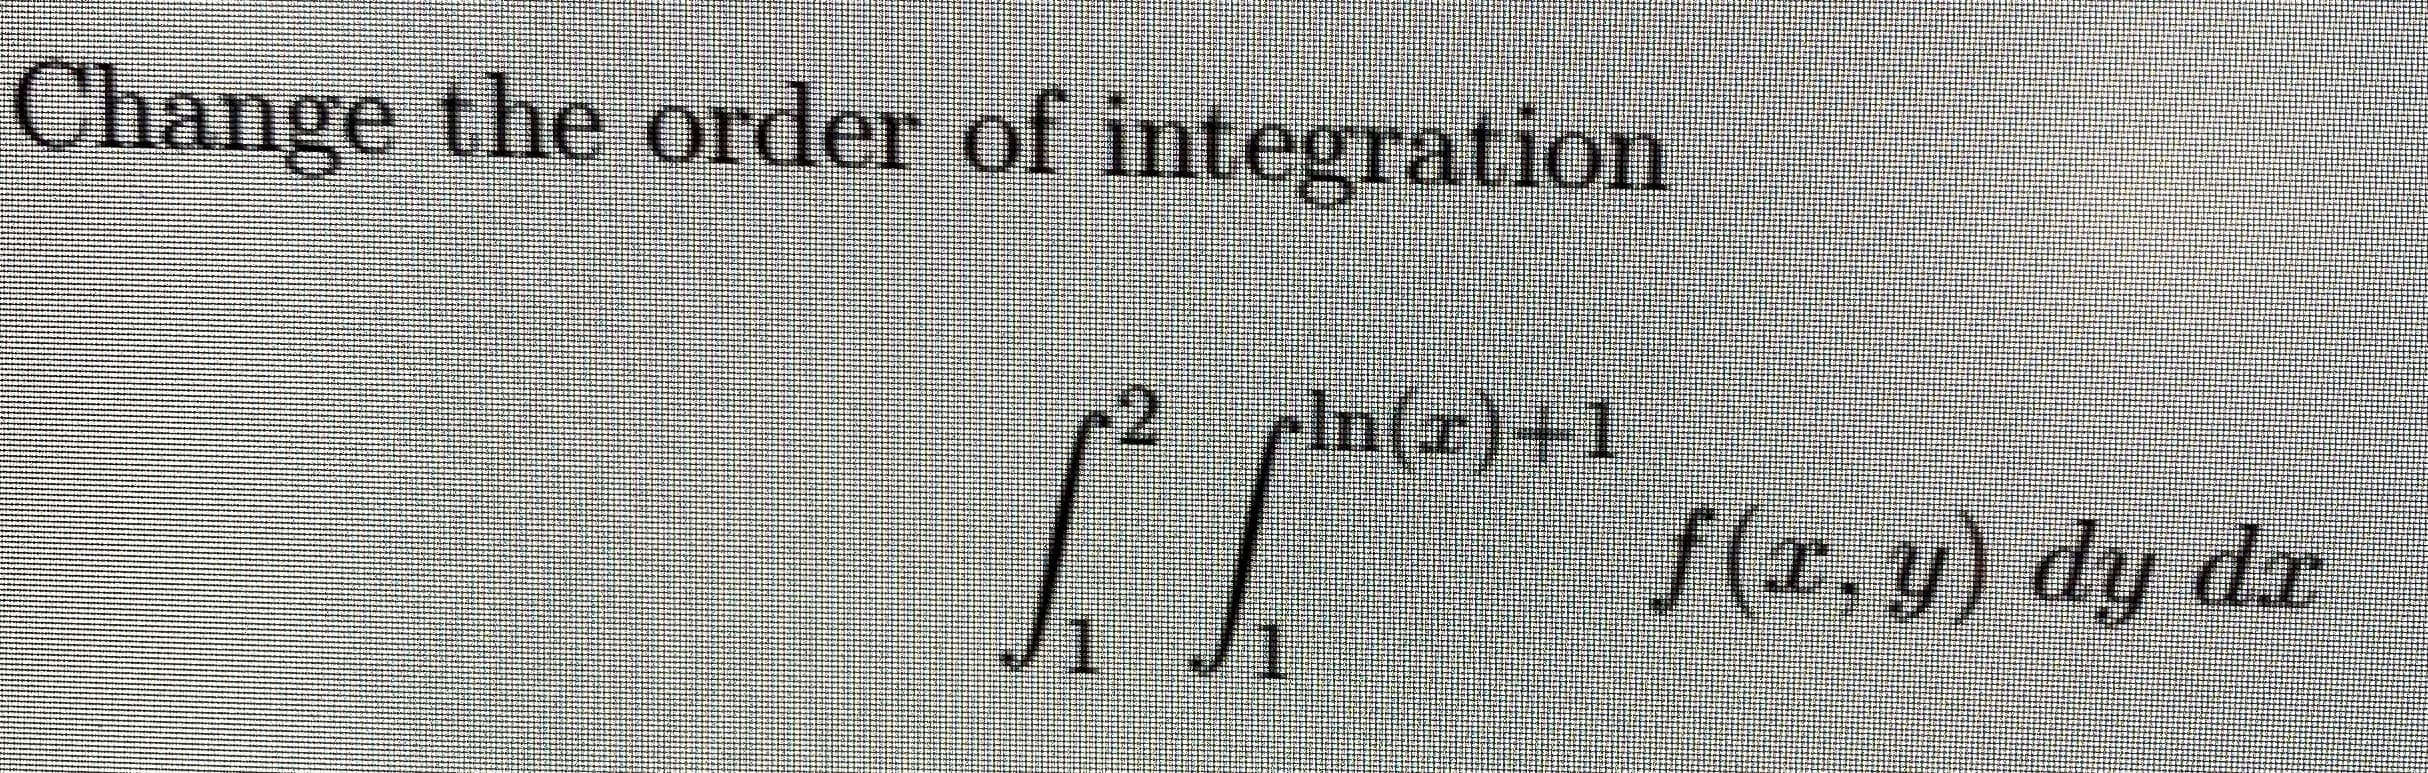 Change the order of integration
2
rIn(r)+1
f(r,y) dy dx
Ji Ji
